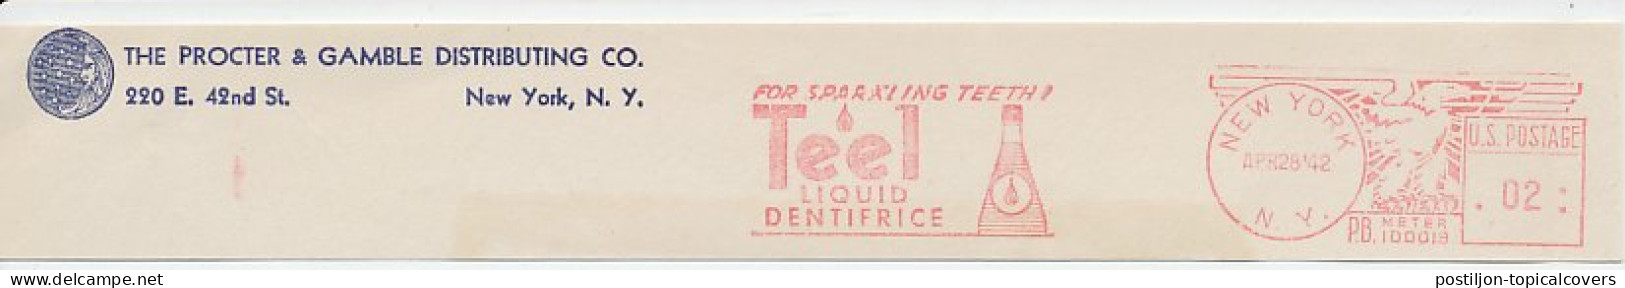 Meter Top Cut USA 1942 Liquid Dentifrice - Teel - Medicina